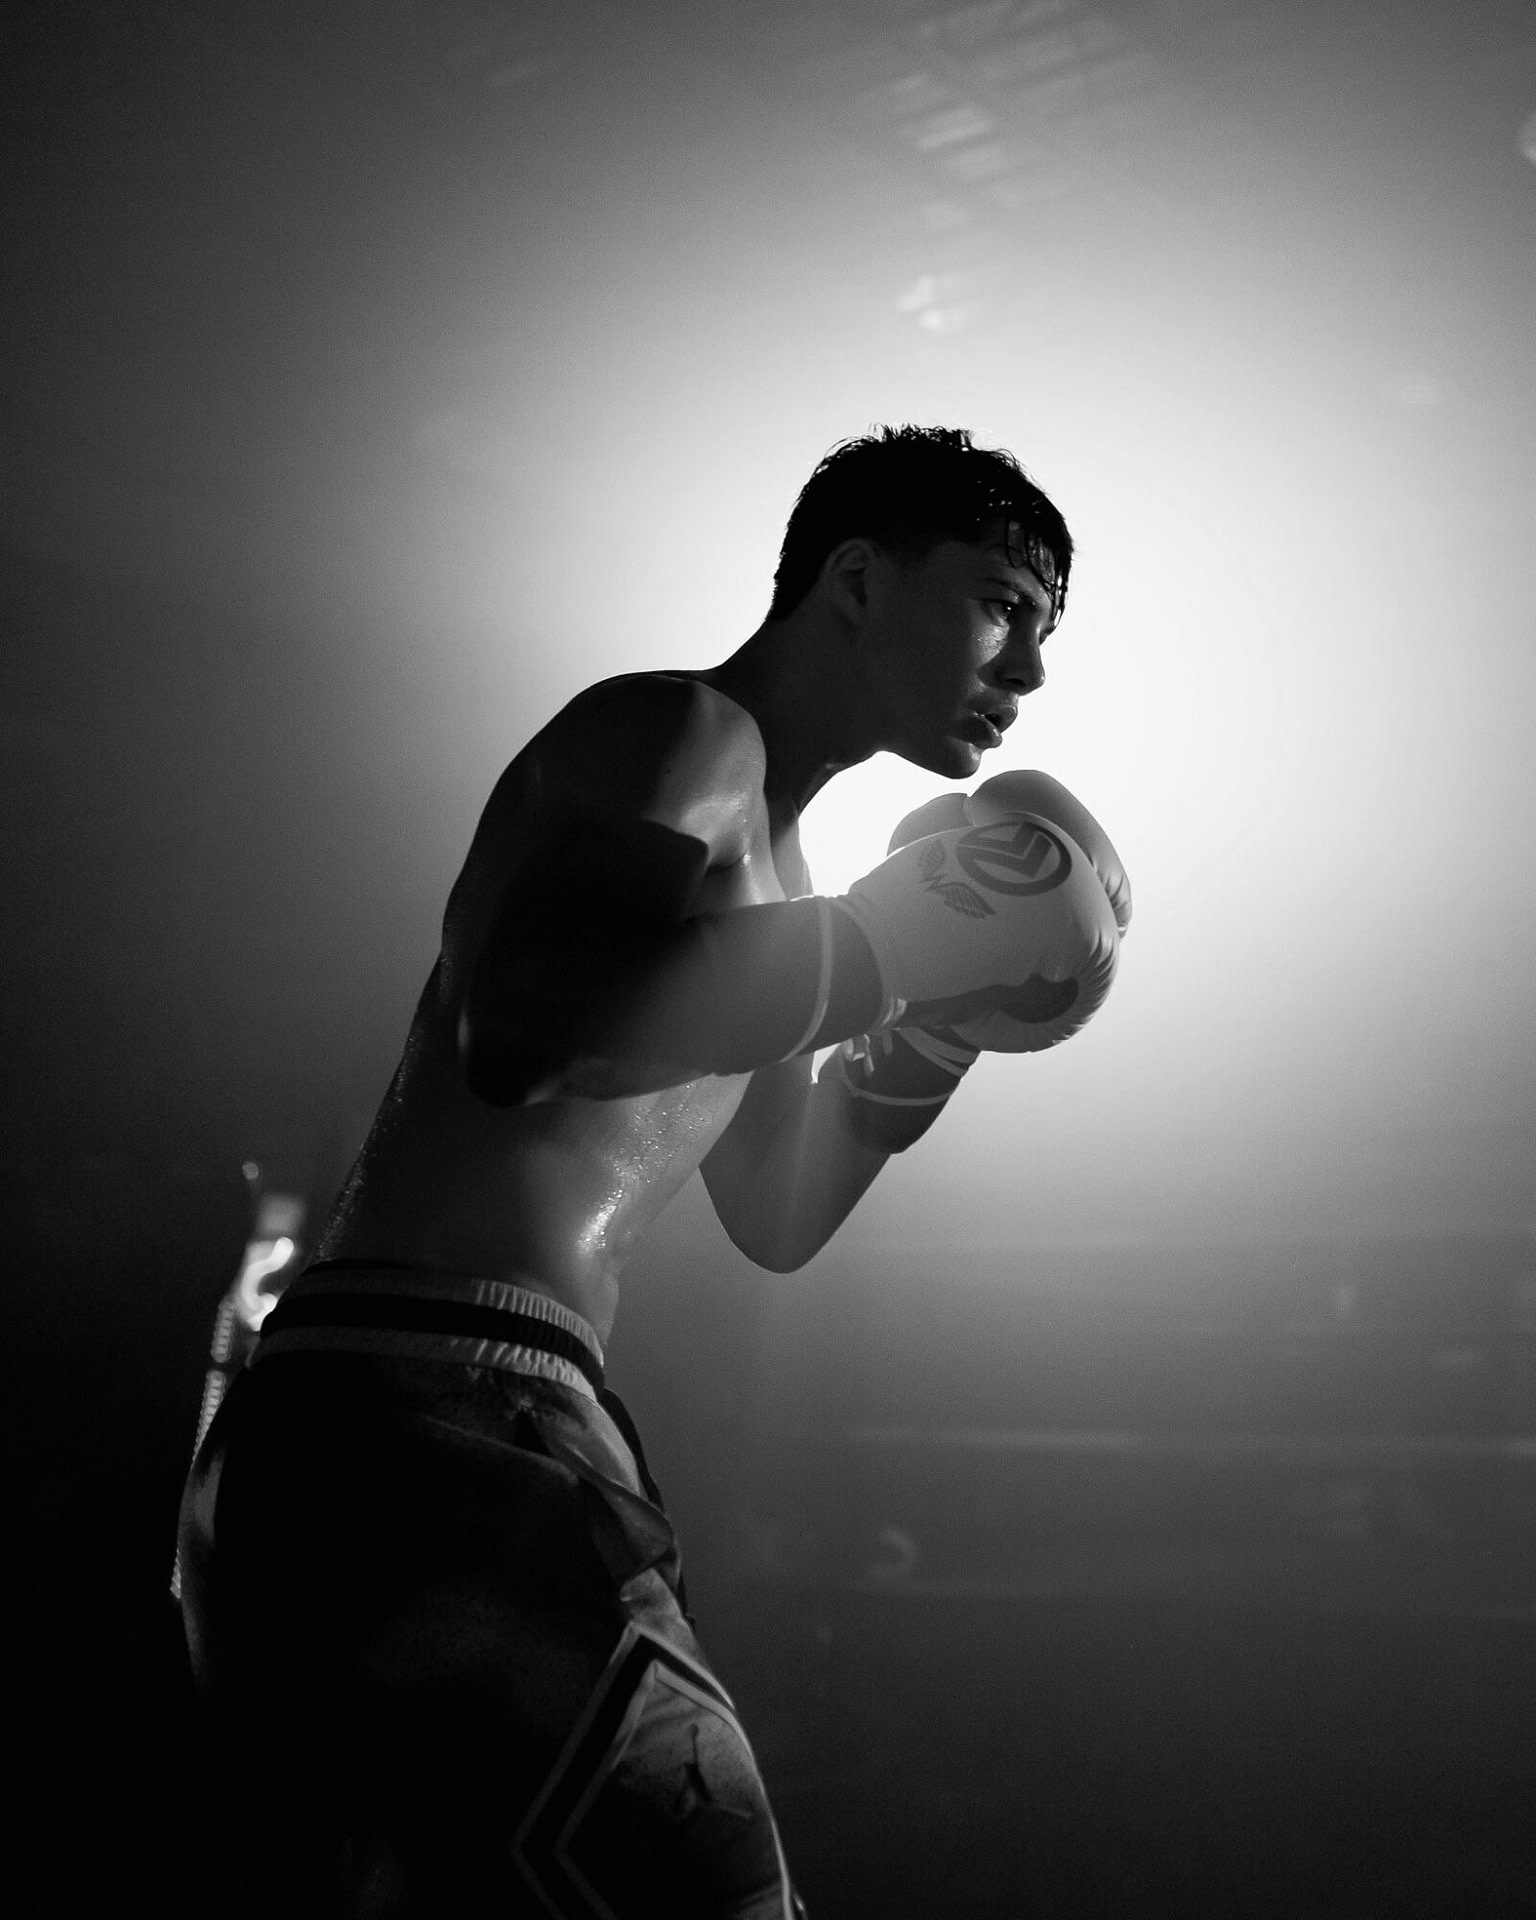 Javon “Wanna” Walton: Ready to Shine in the Boxing Ring